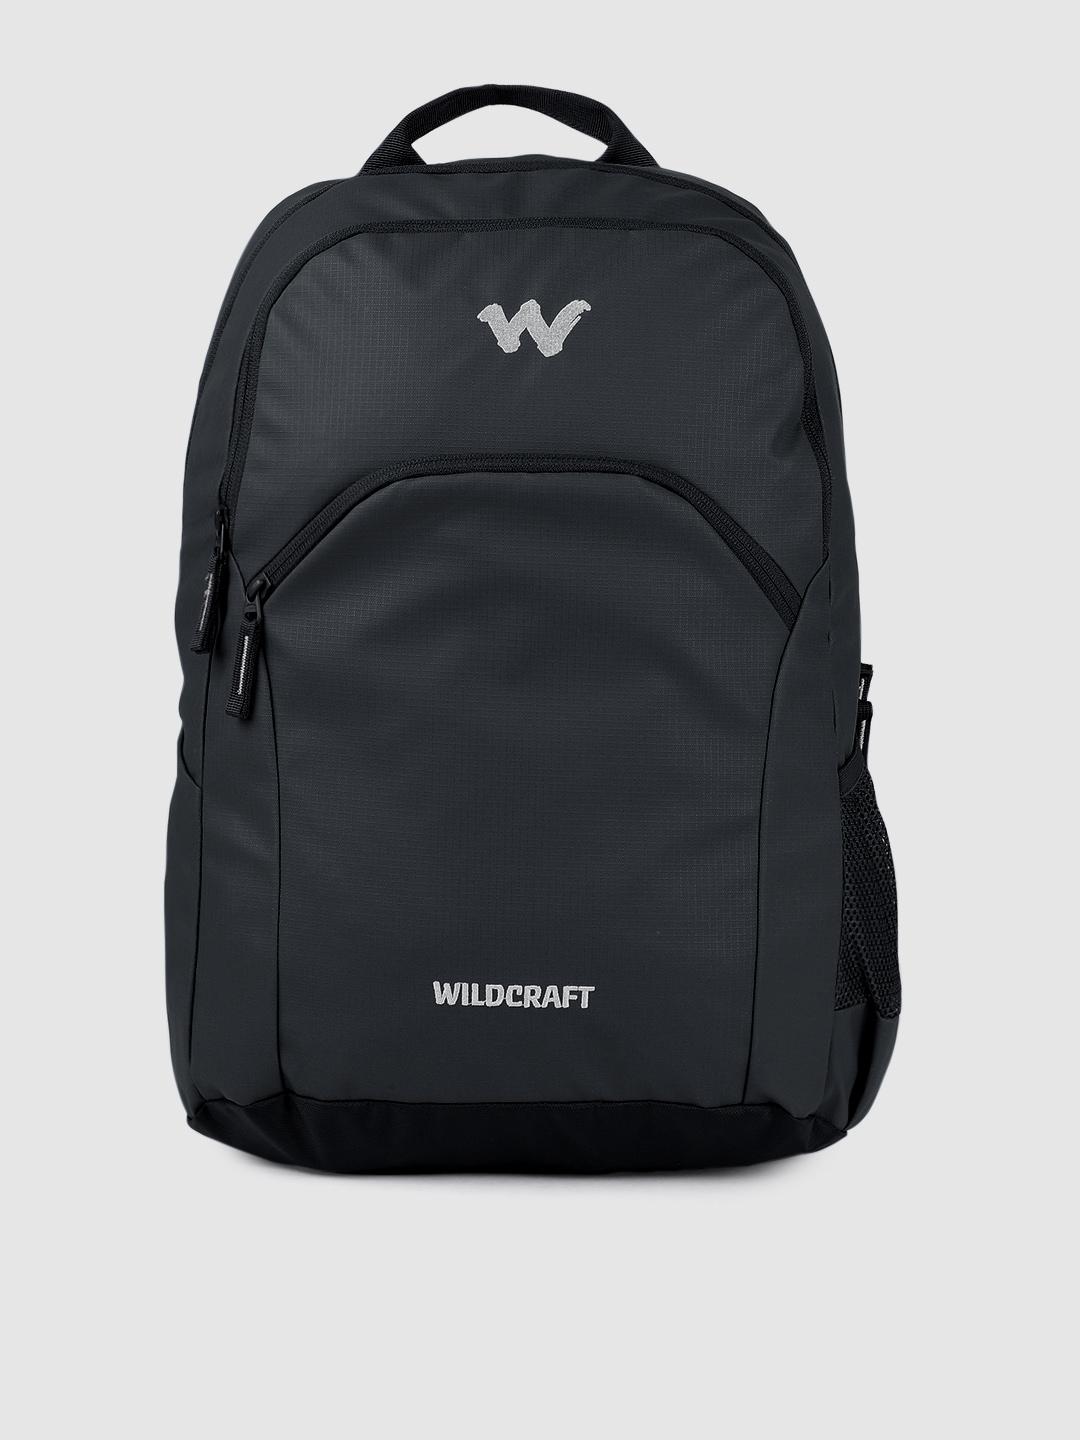 wildcraft-unisex-black-solid-ace-2-coated-backpack